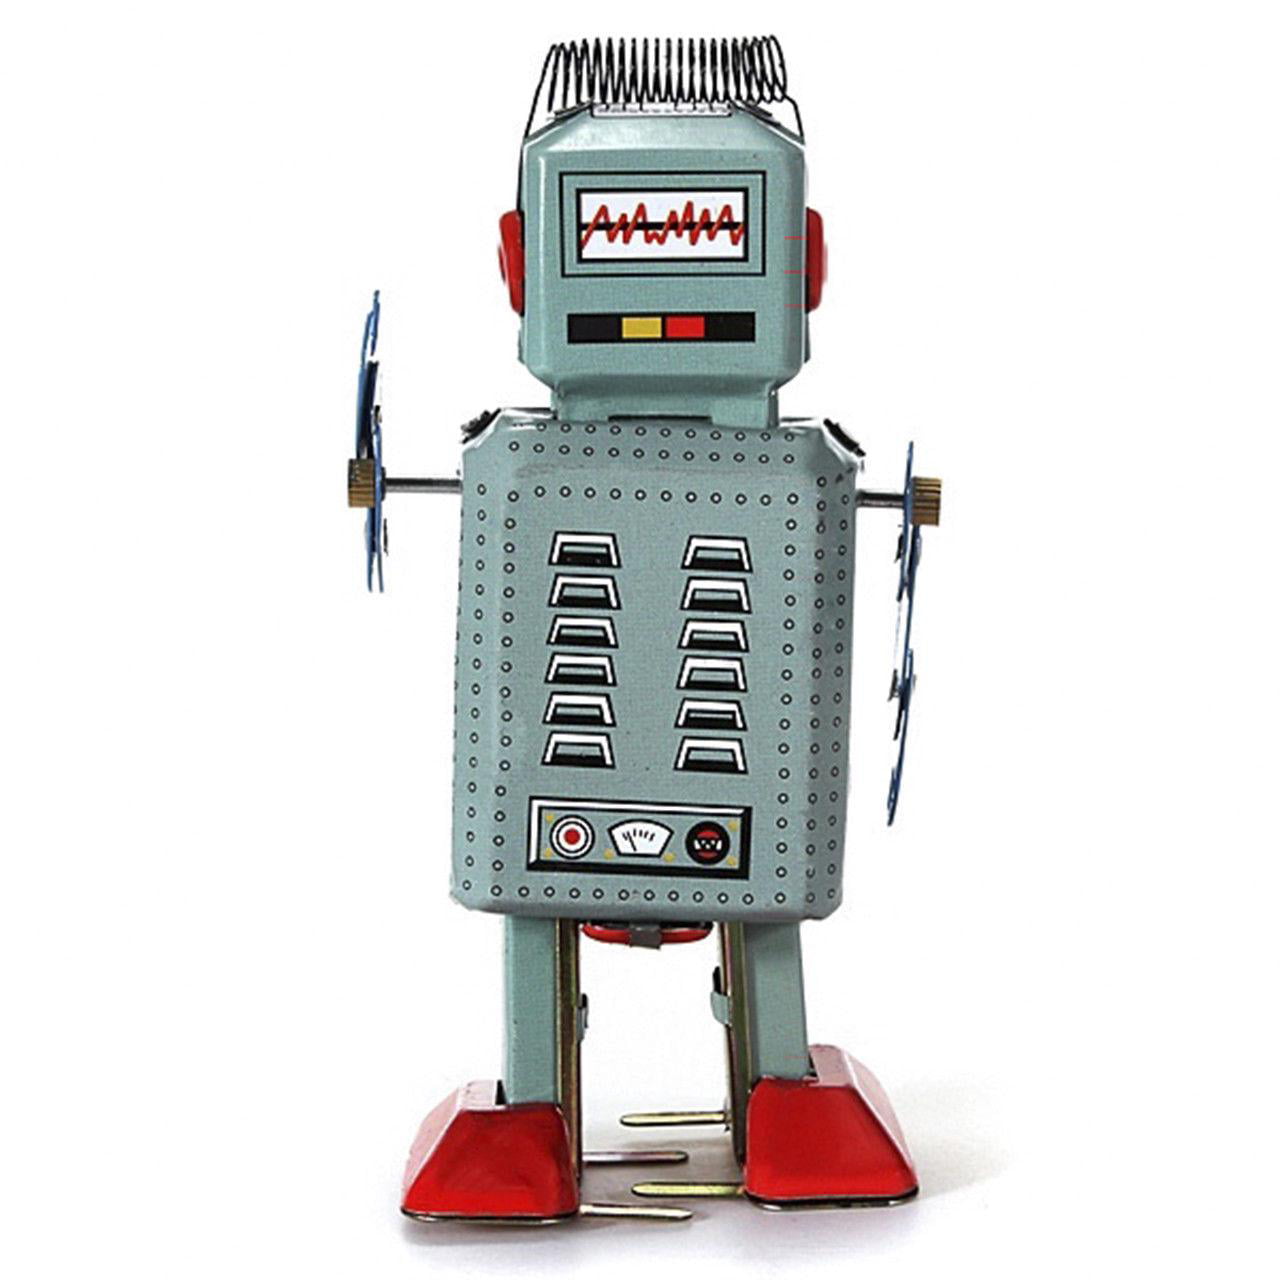 Clockwork Wind Up Metal Walking Robot Toy Retro Vintage Mechanical Kids Gift 